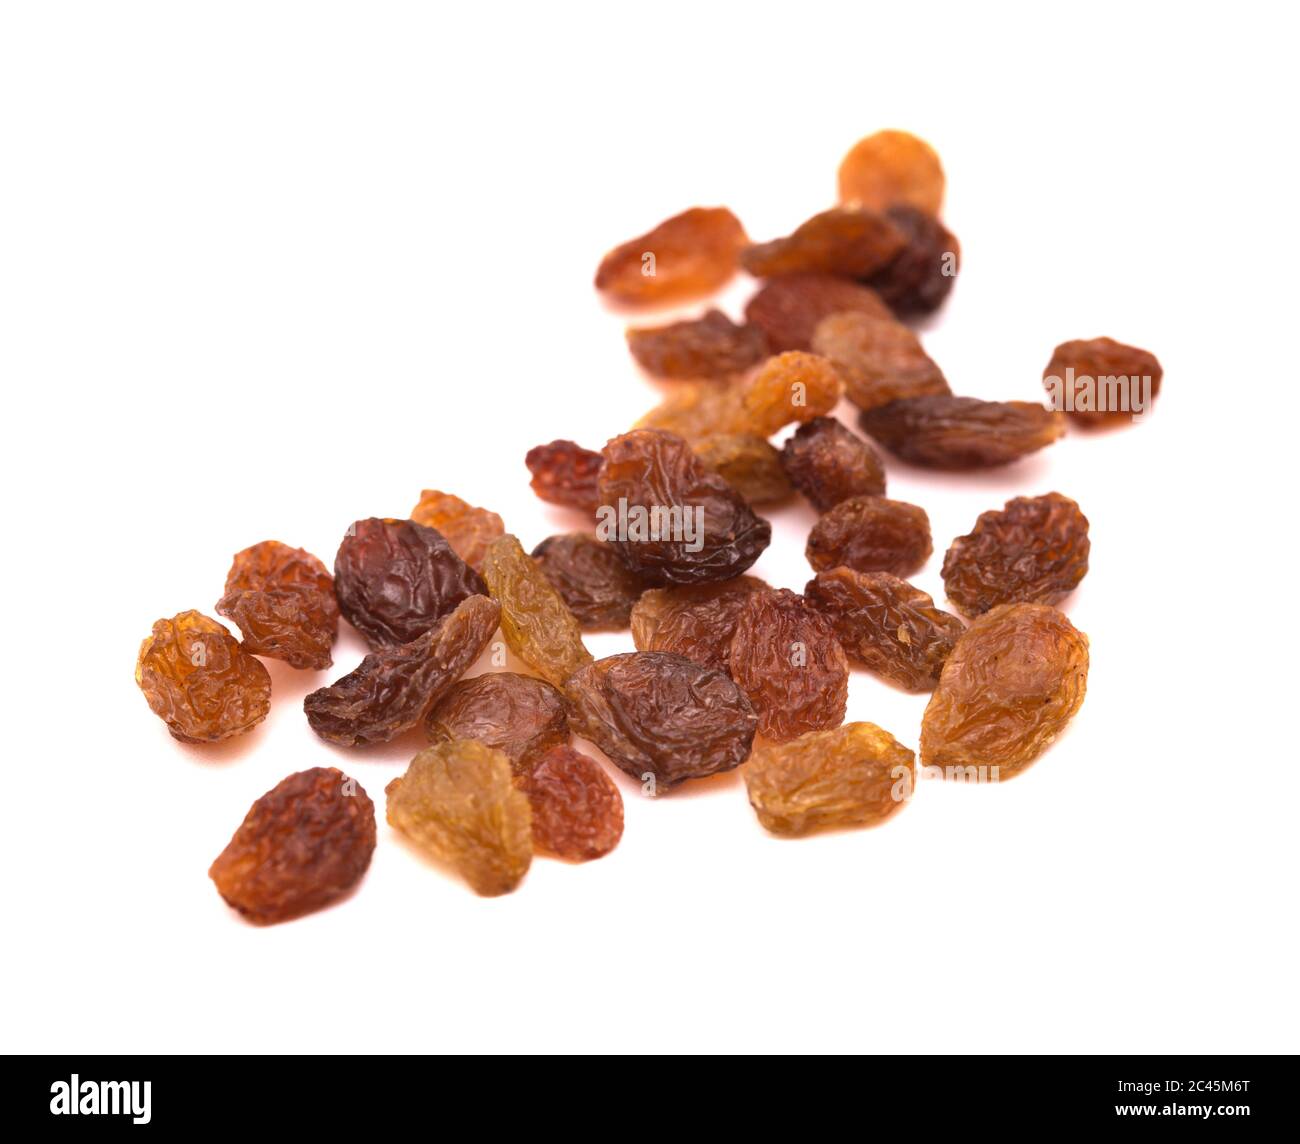 brown sultana raisins isolated on white background Stock Photo - Alamy